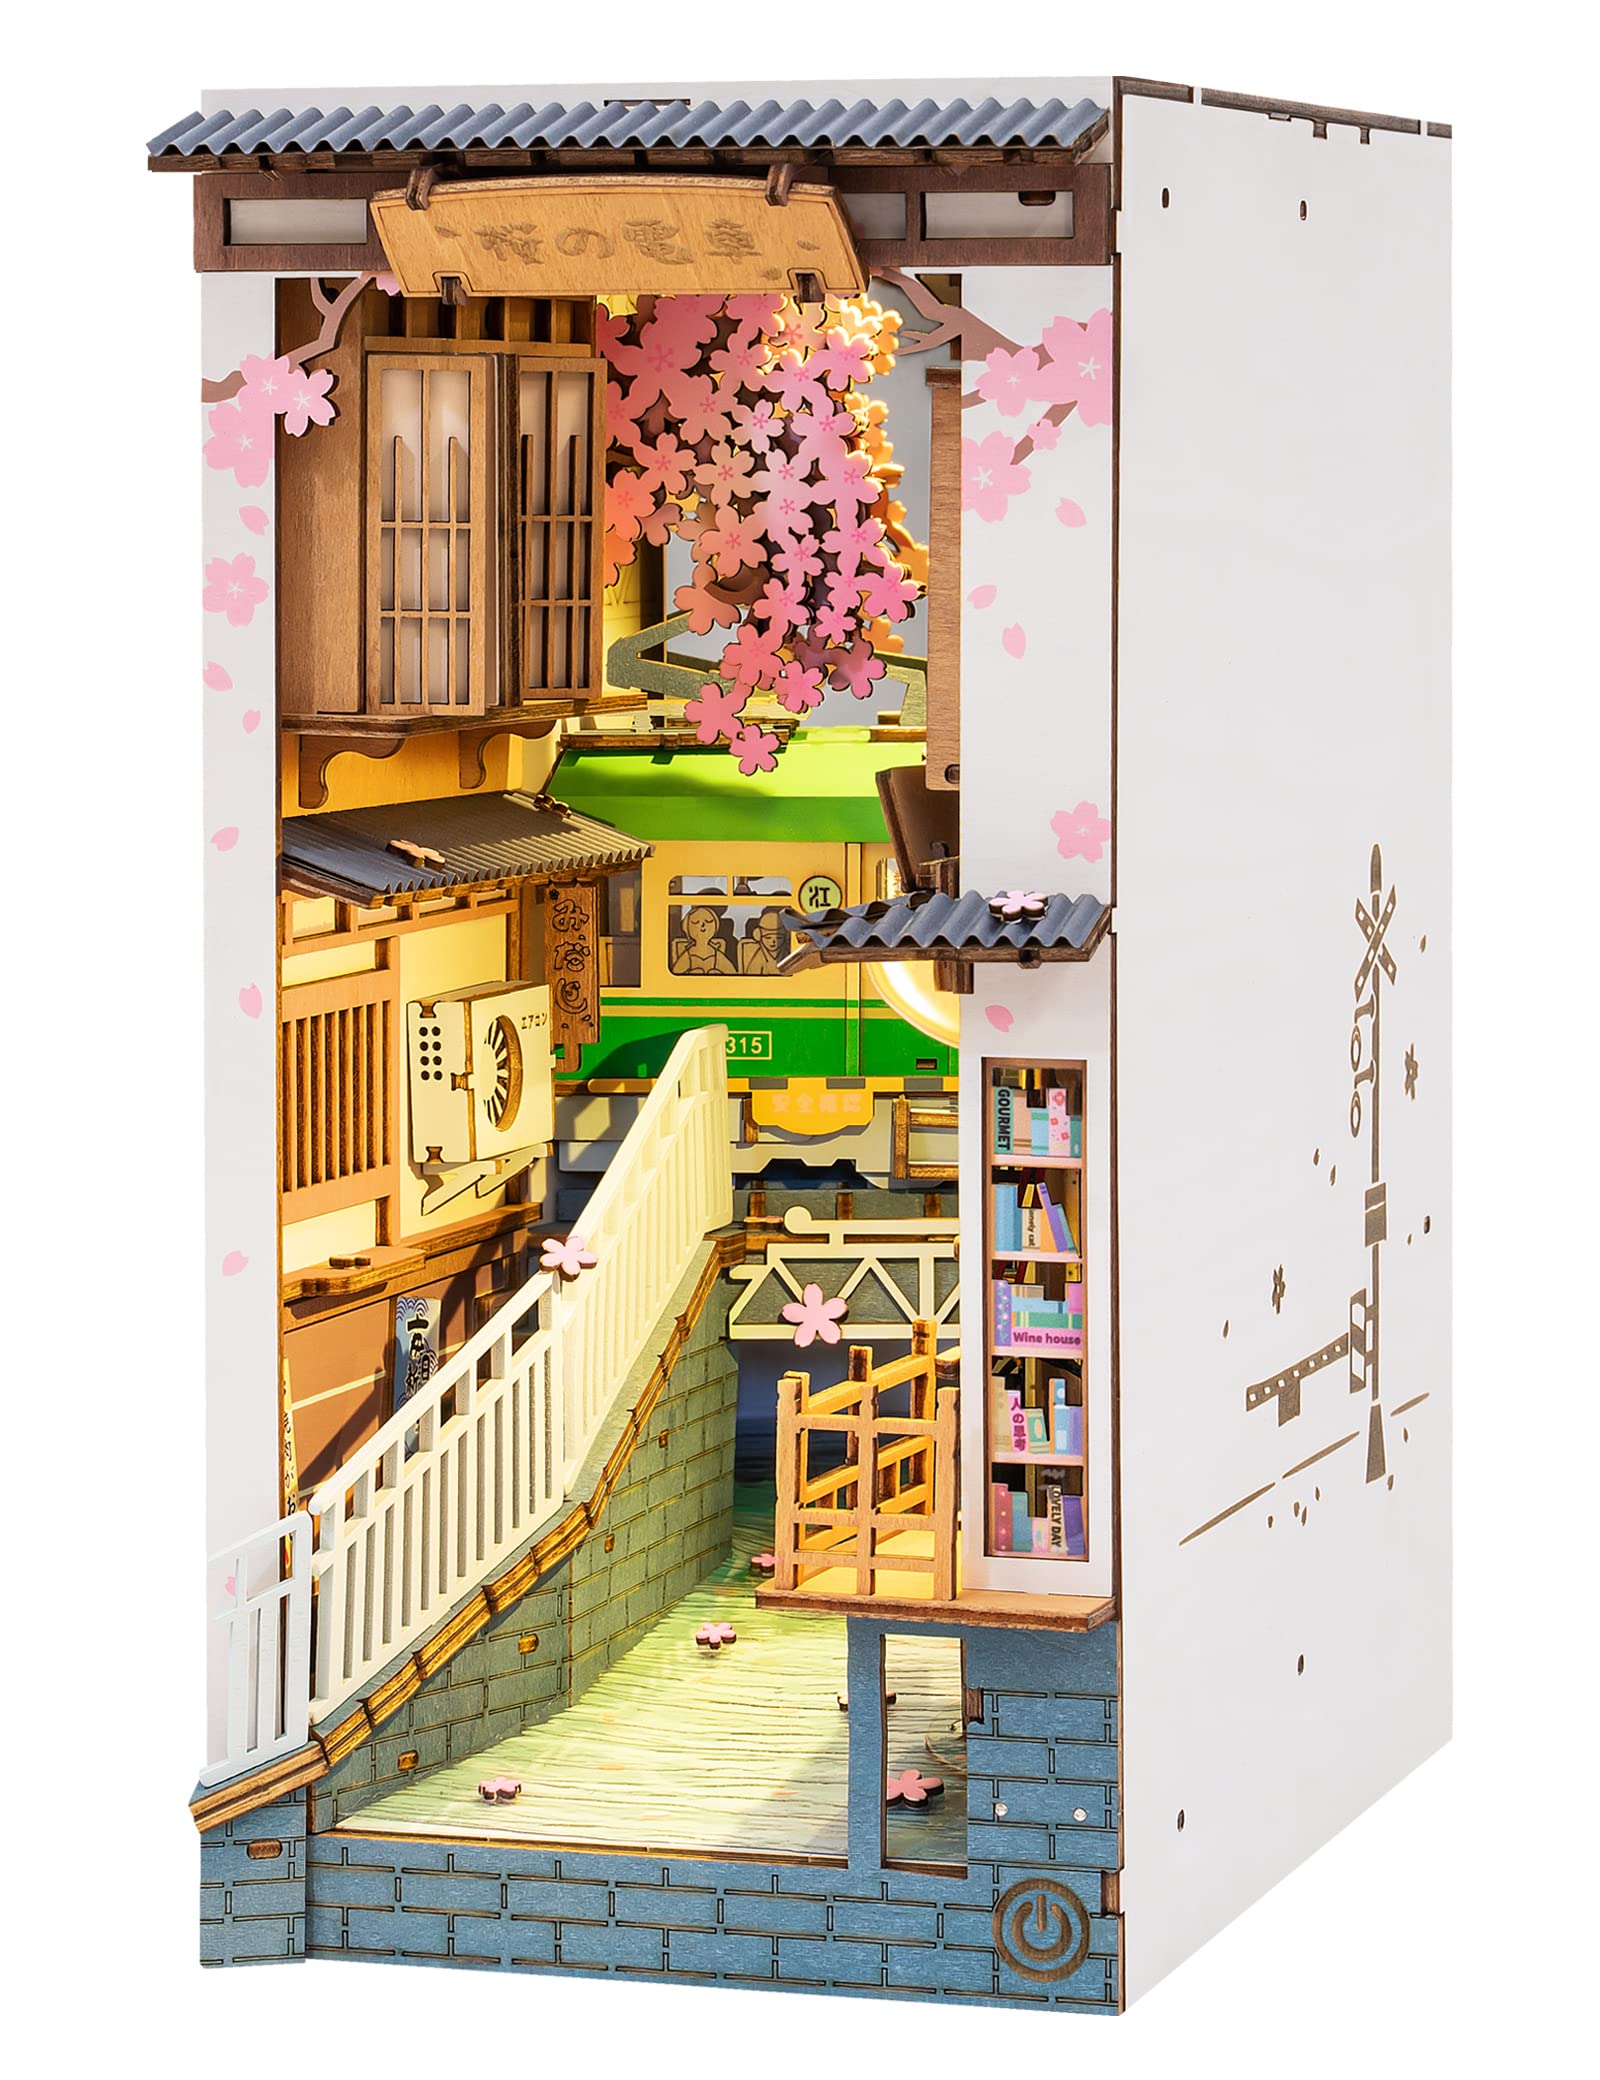 Rolife DIY Book Nook Kit 3D Wooden Puzzle, Bookshelf Insert Decor with LED DIY Bookend Diorama Miniature Kit Crafts Hobbies Gifts for Adults/Teens (Sakura Densya)